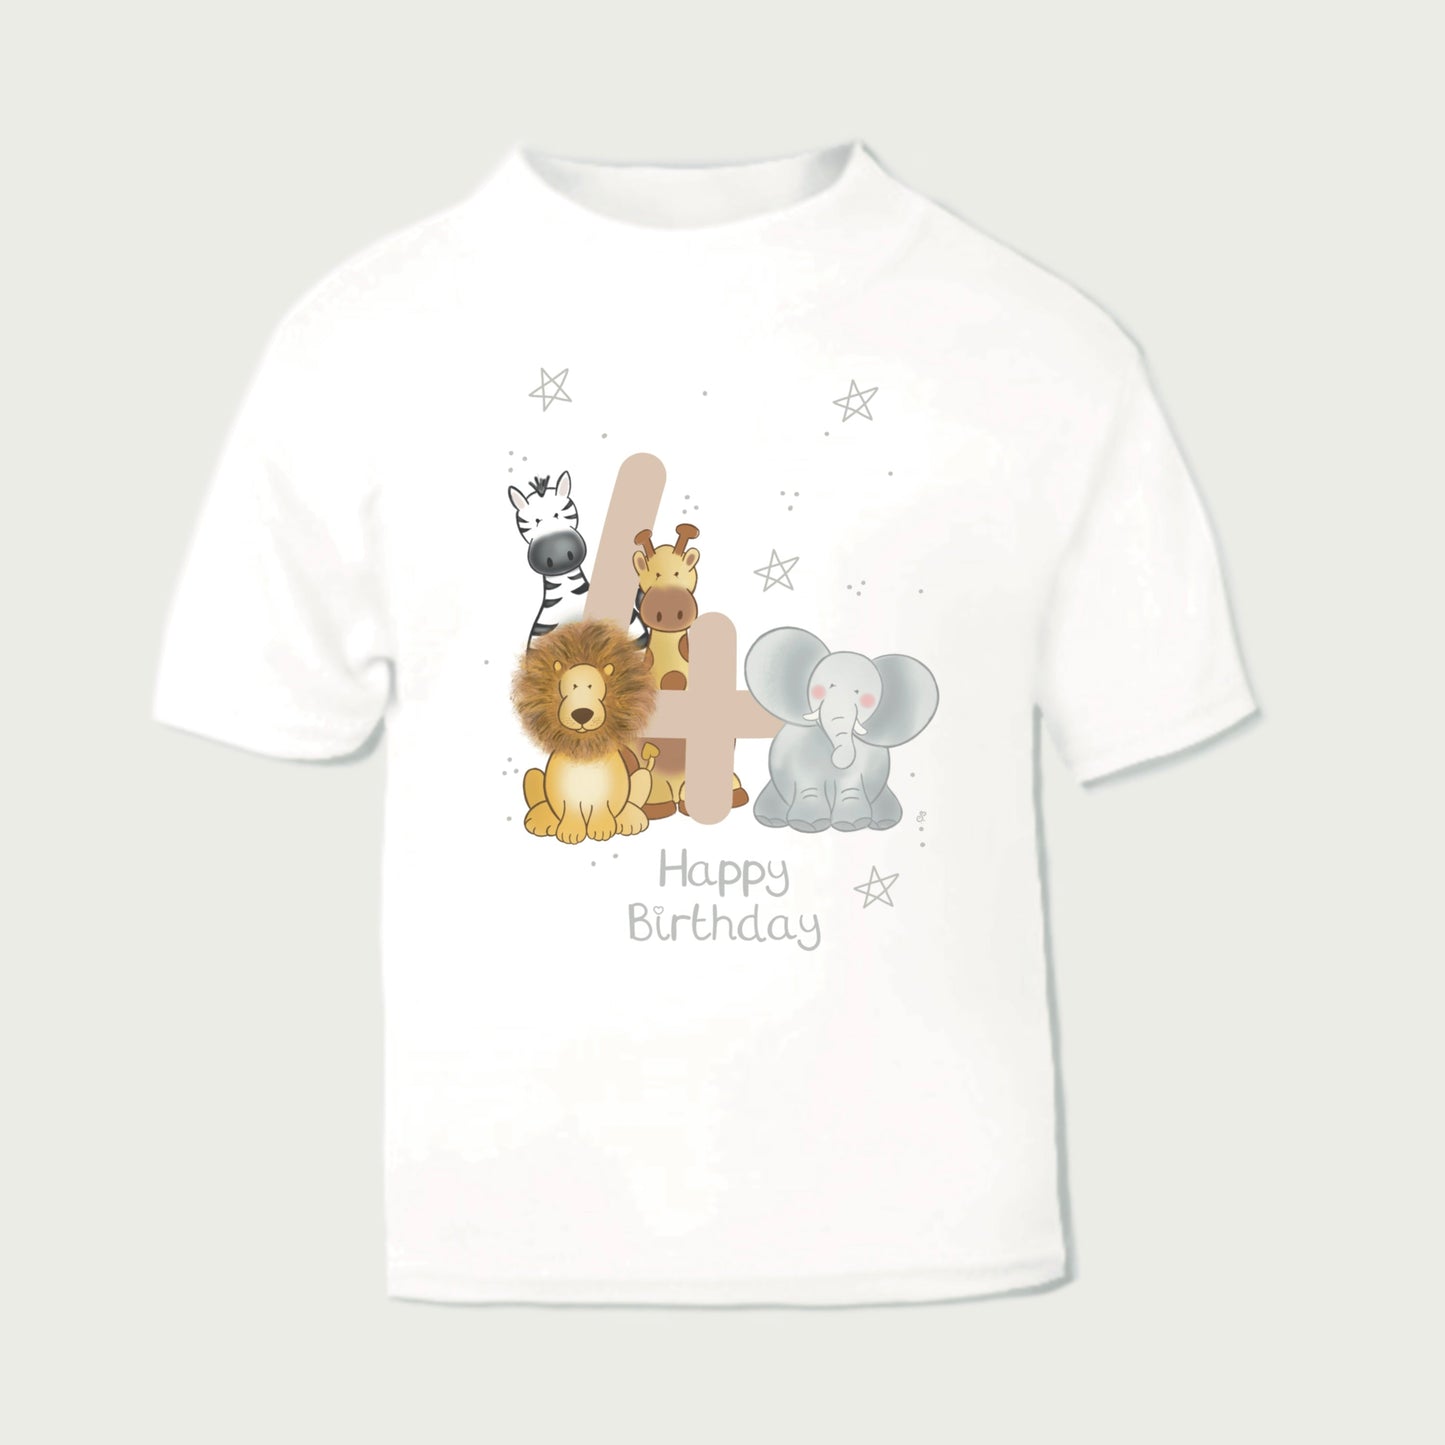 6th Birthday - Safari Party - T-Shirt / Sweatshirt - Personalise me